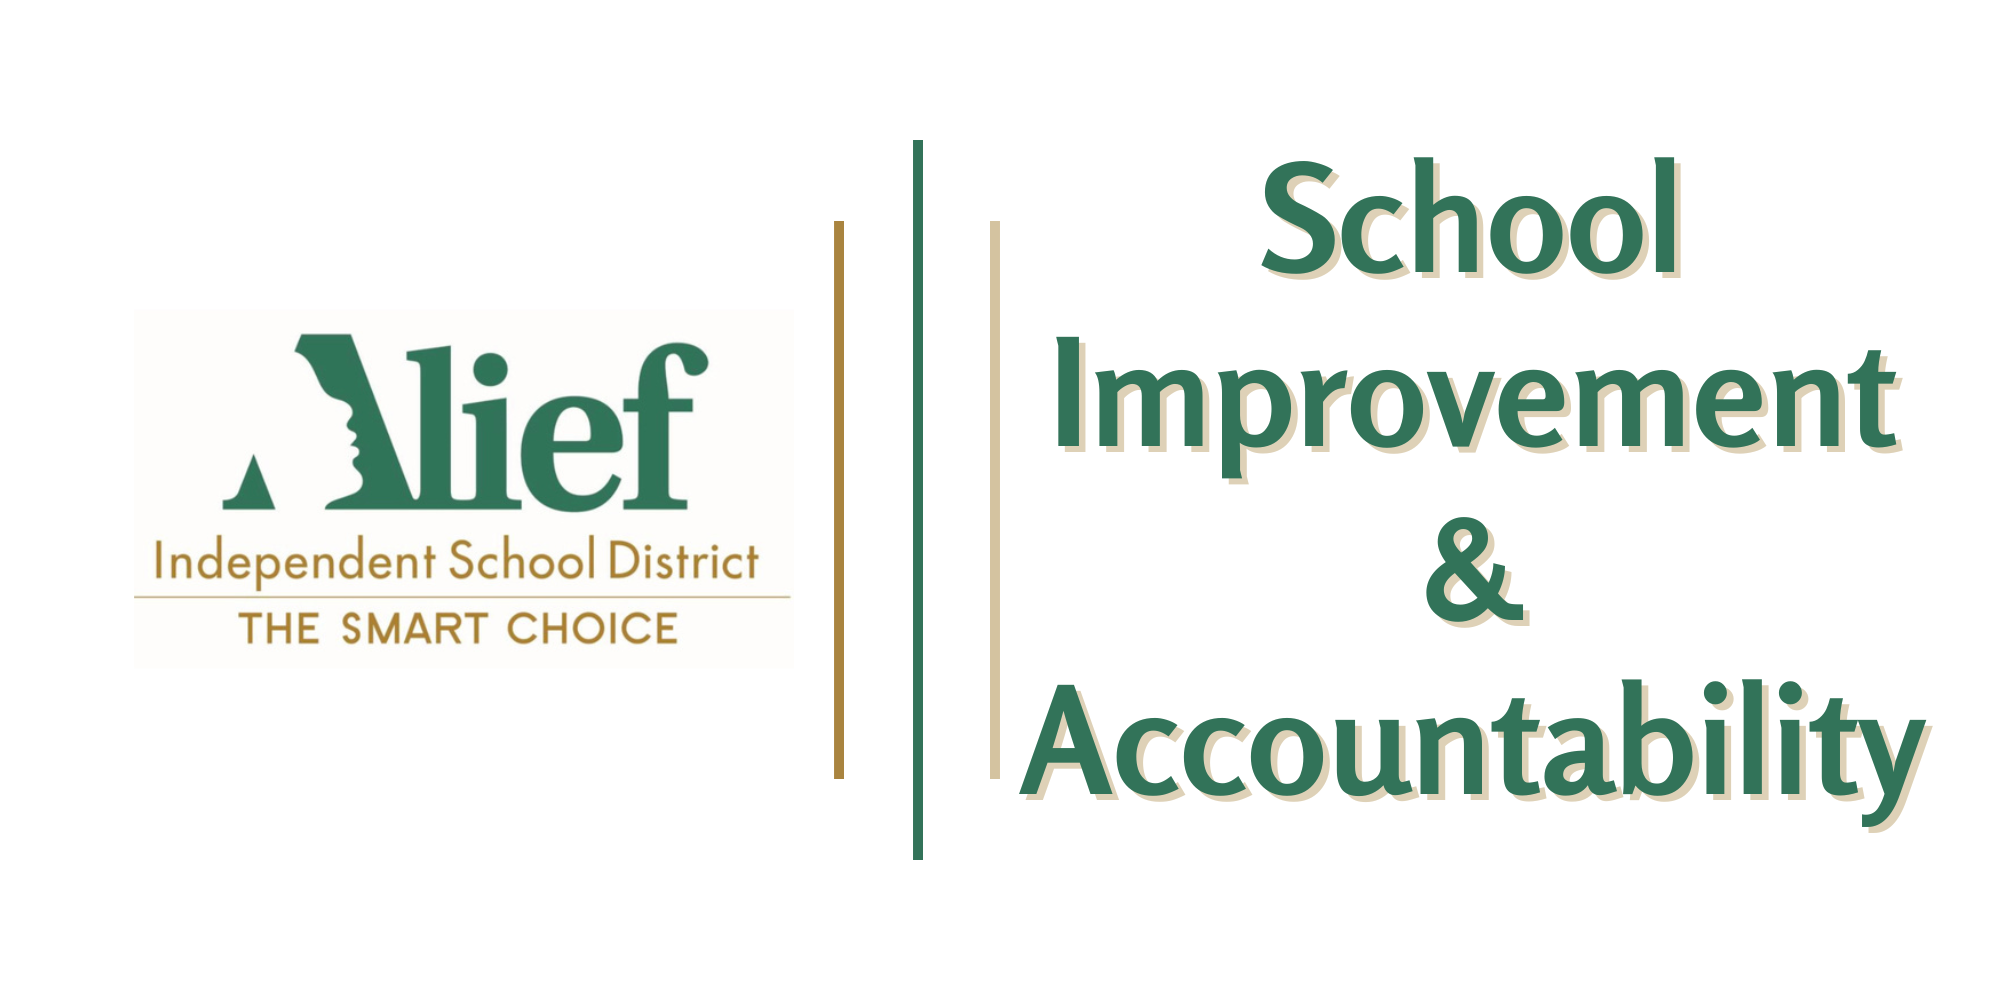 School Accountability and Improvement